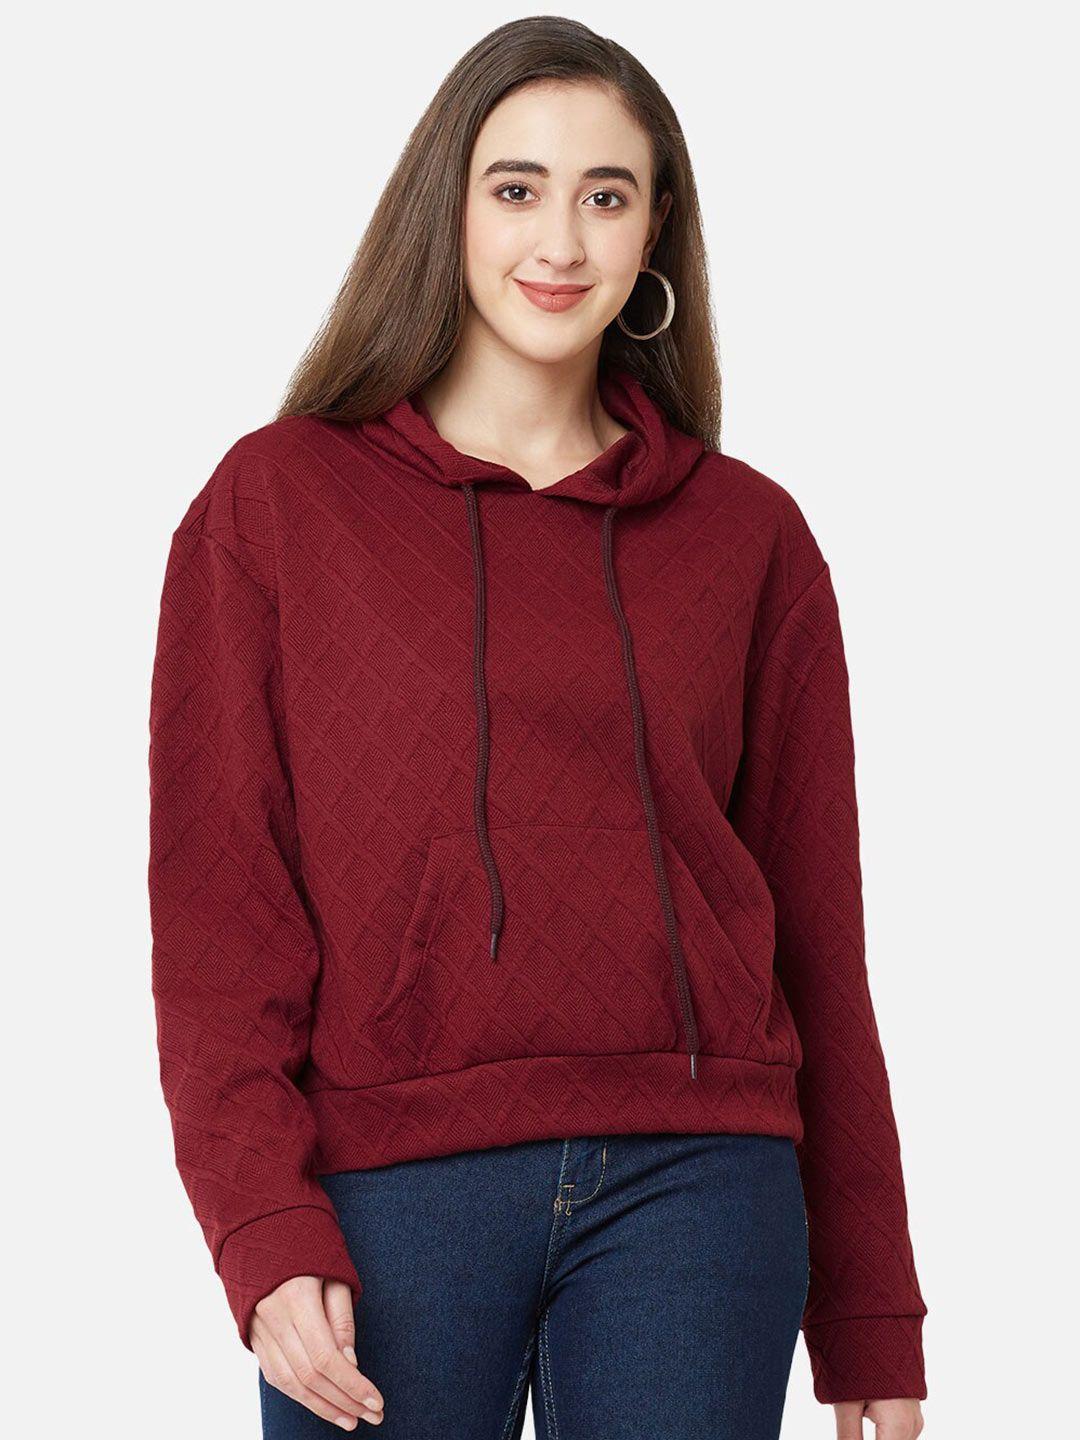 109f women maroon hooded sweatshirt